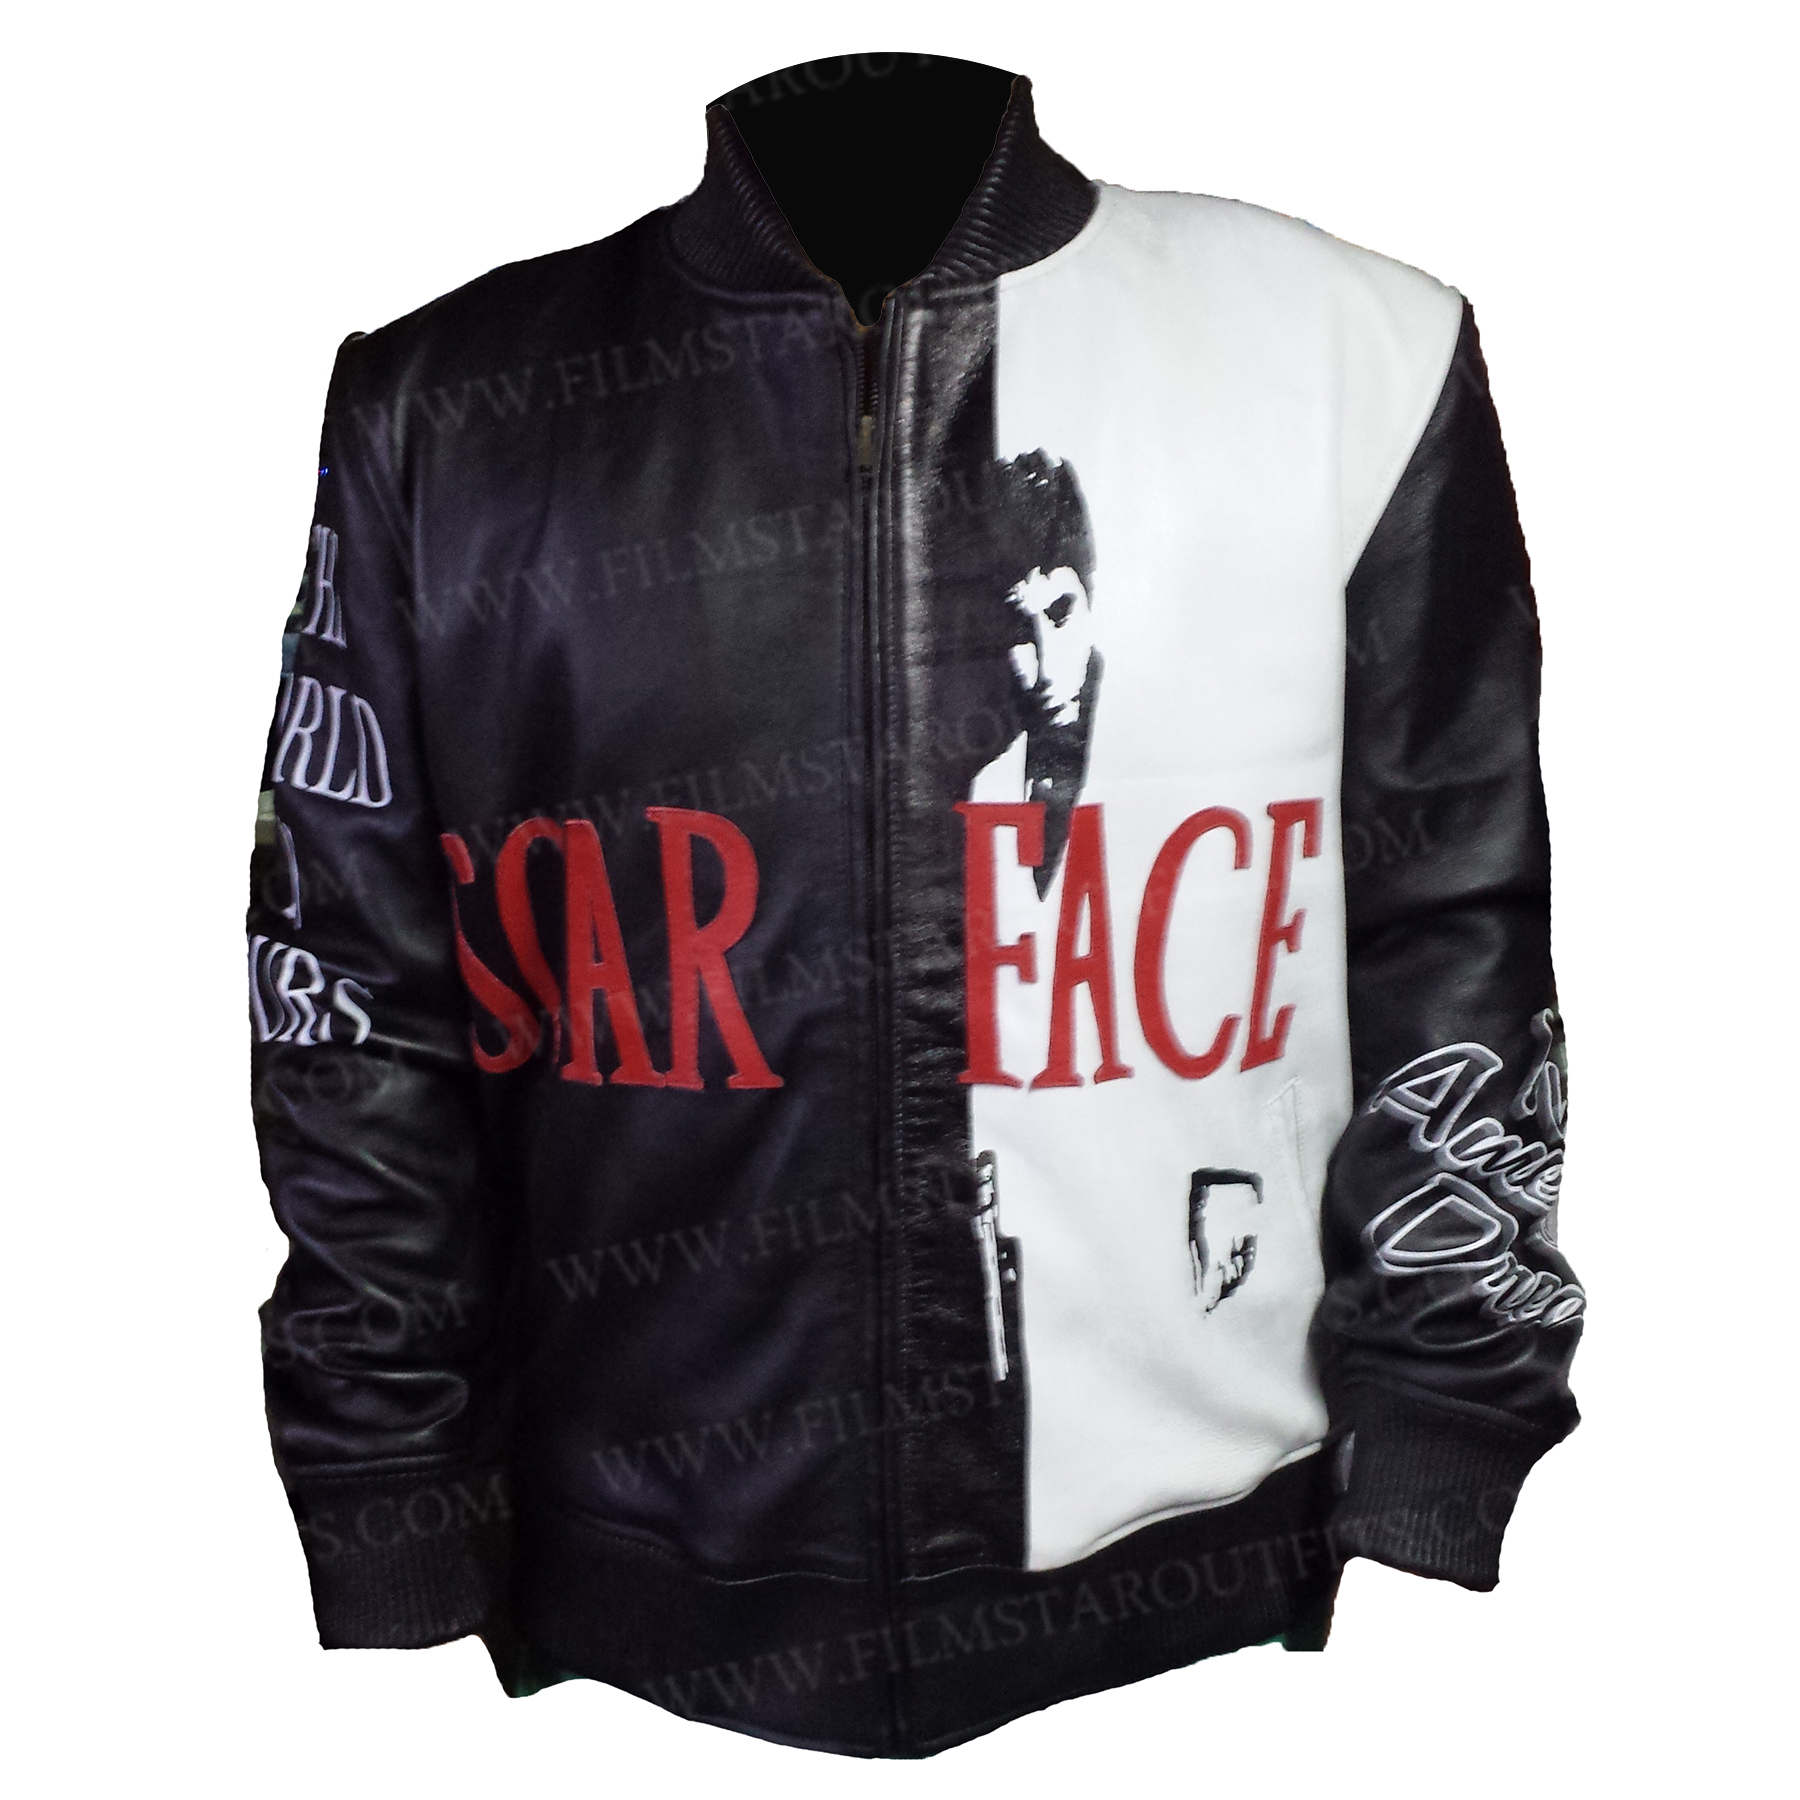 Scarface Jacket | Tony Montana Bomber Leather Jacket - Film Star